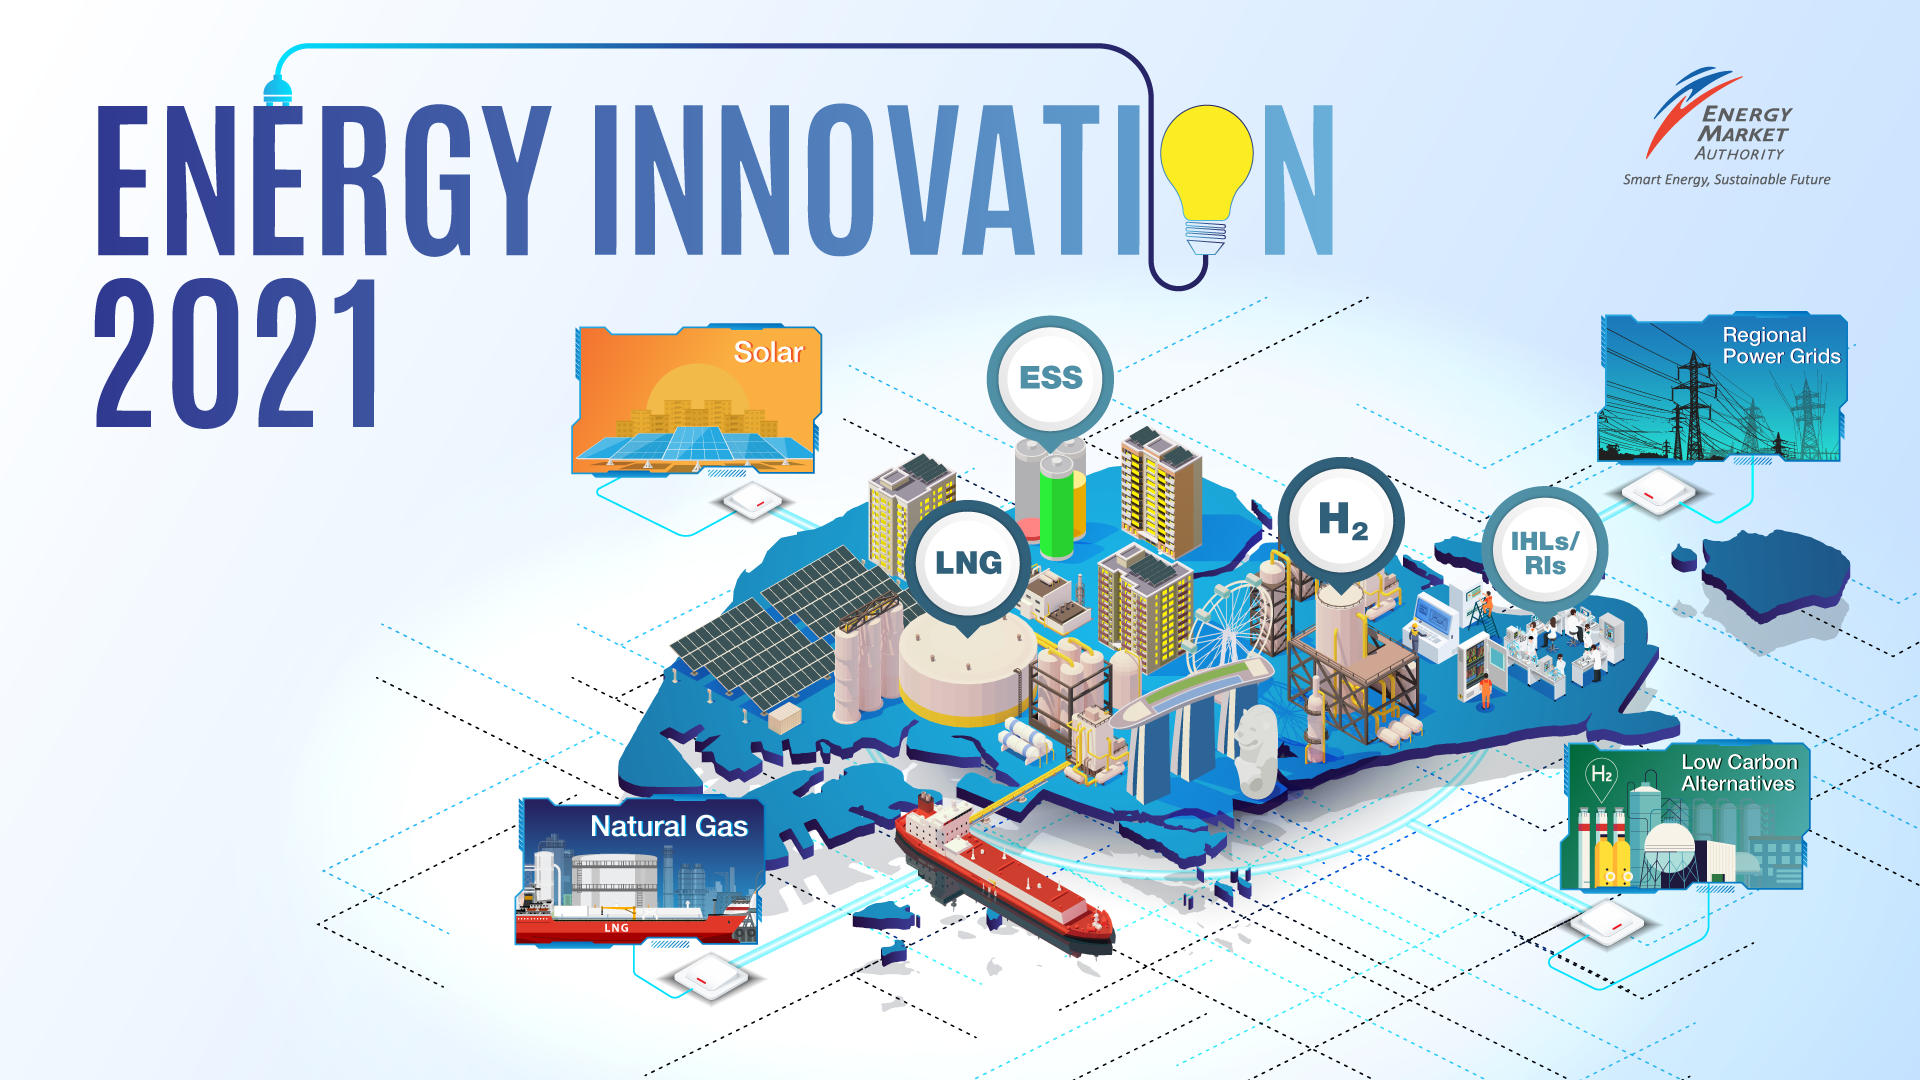 Energy Innovation 2021